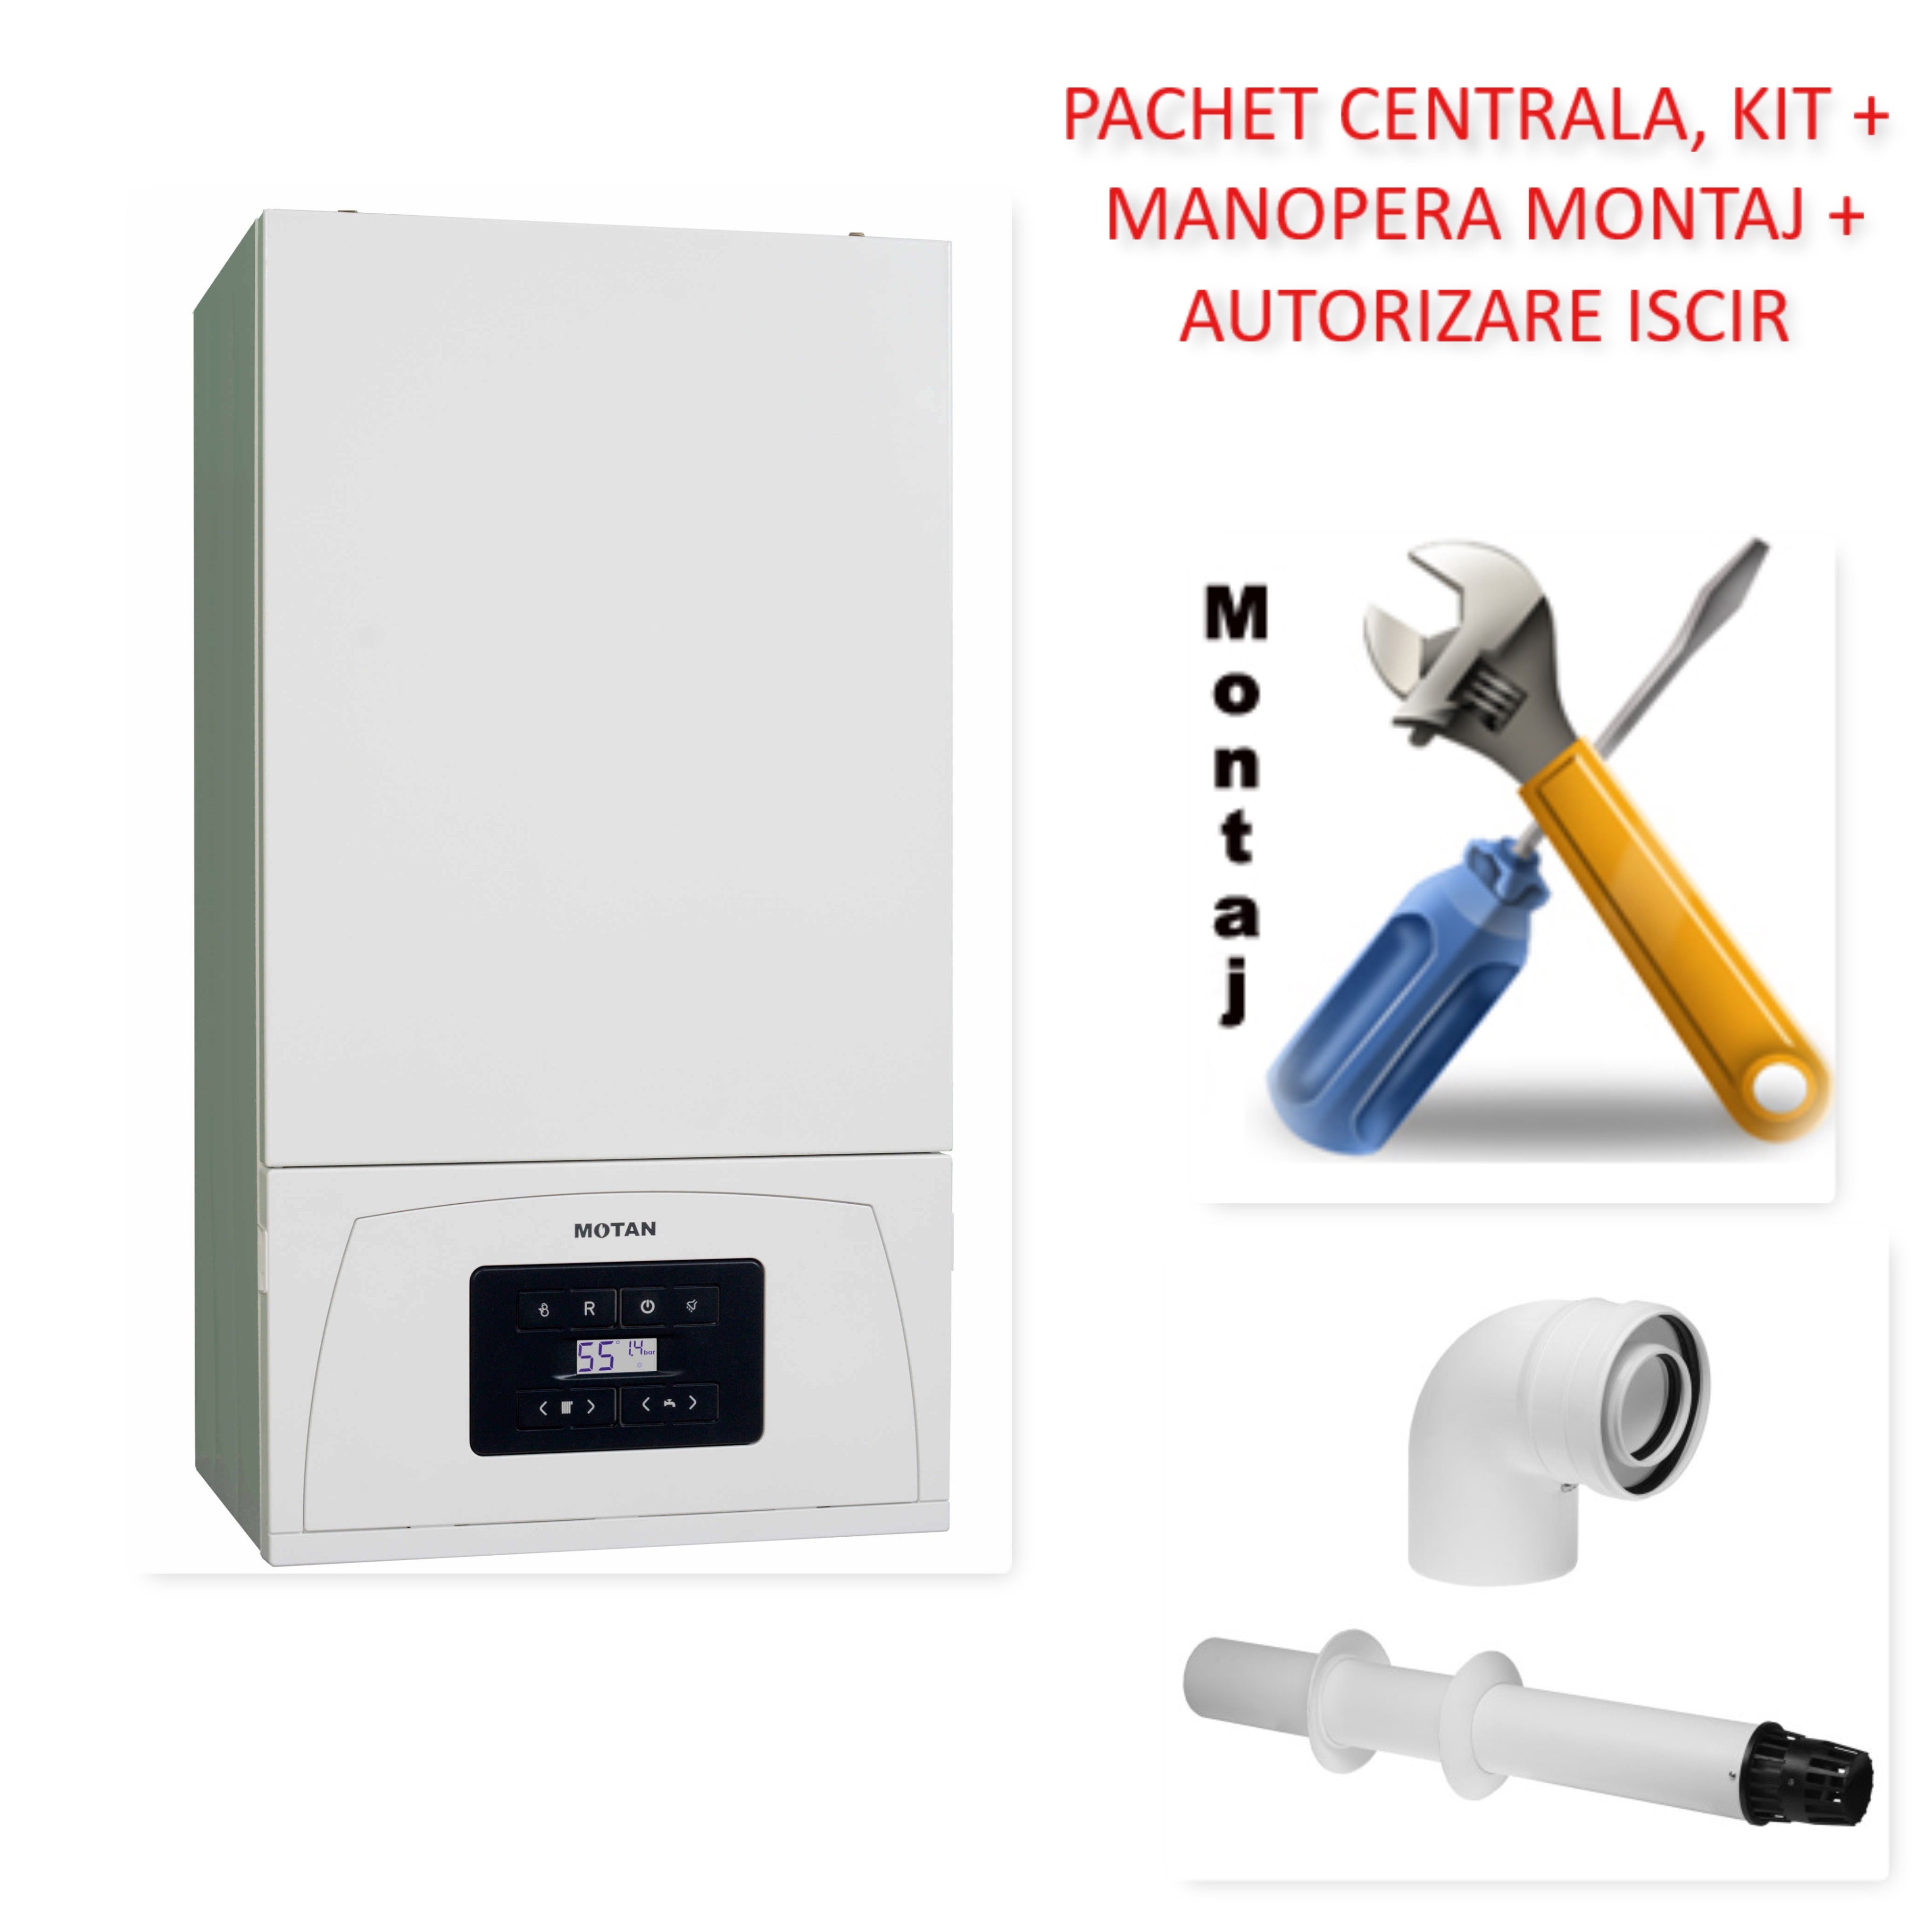 Pachet centrala condensatie Motan Condens 050 24 - 24 KW cu manopera montaj si autorizare ISCIR